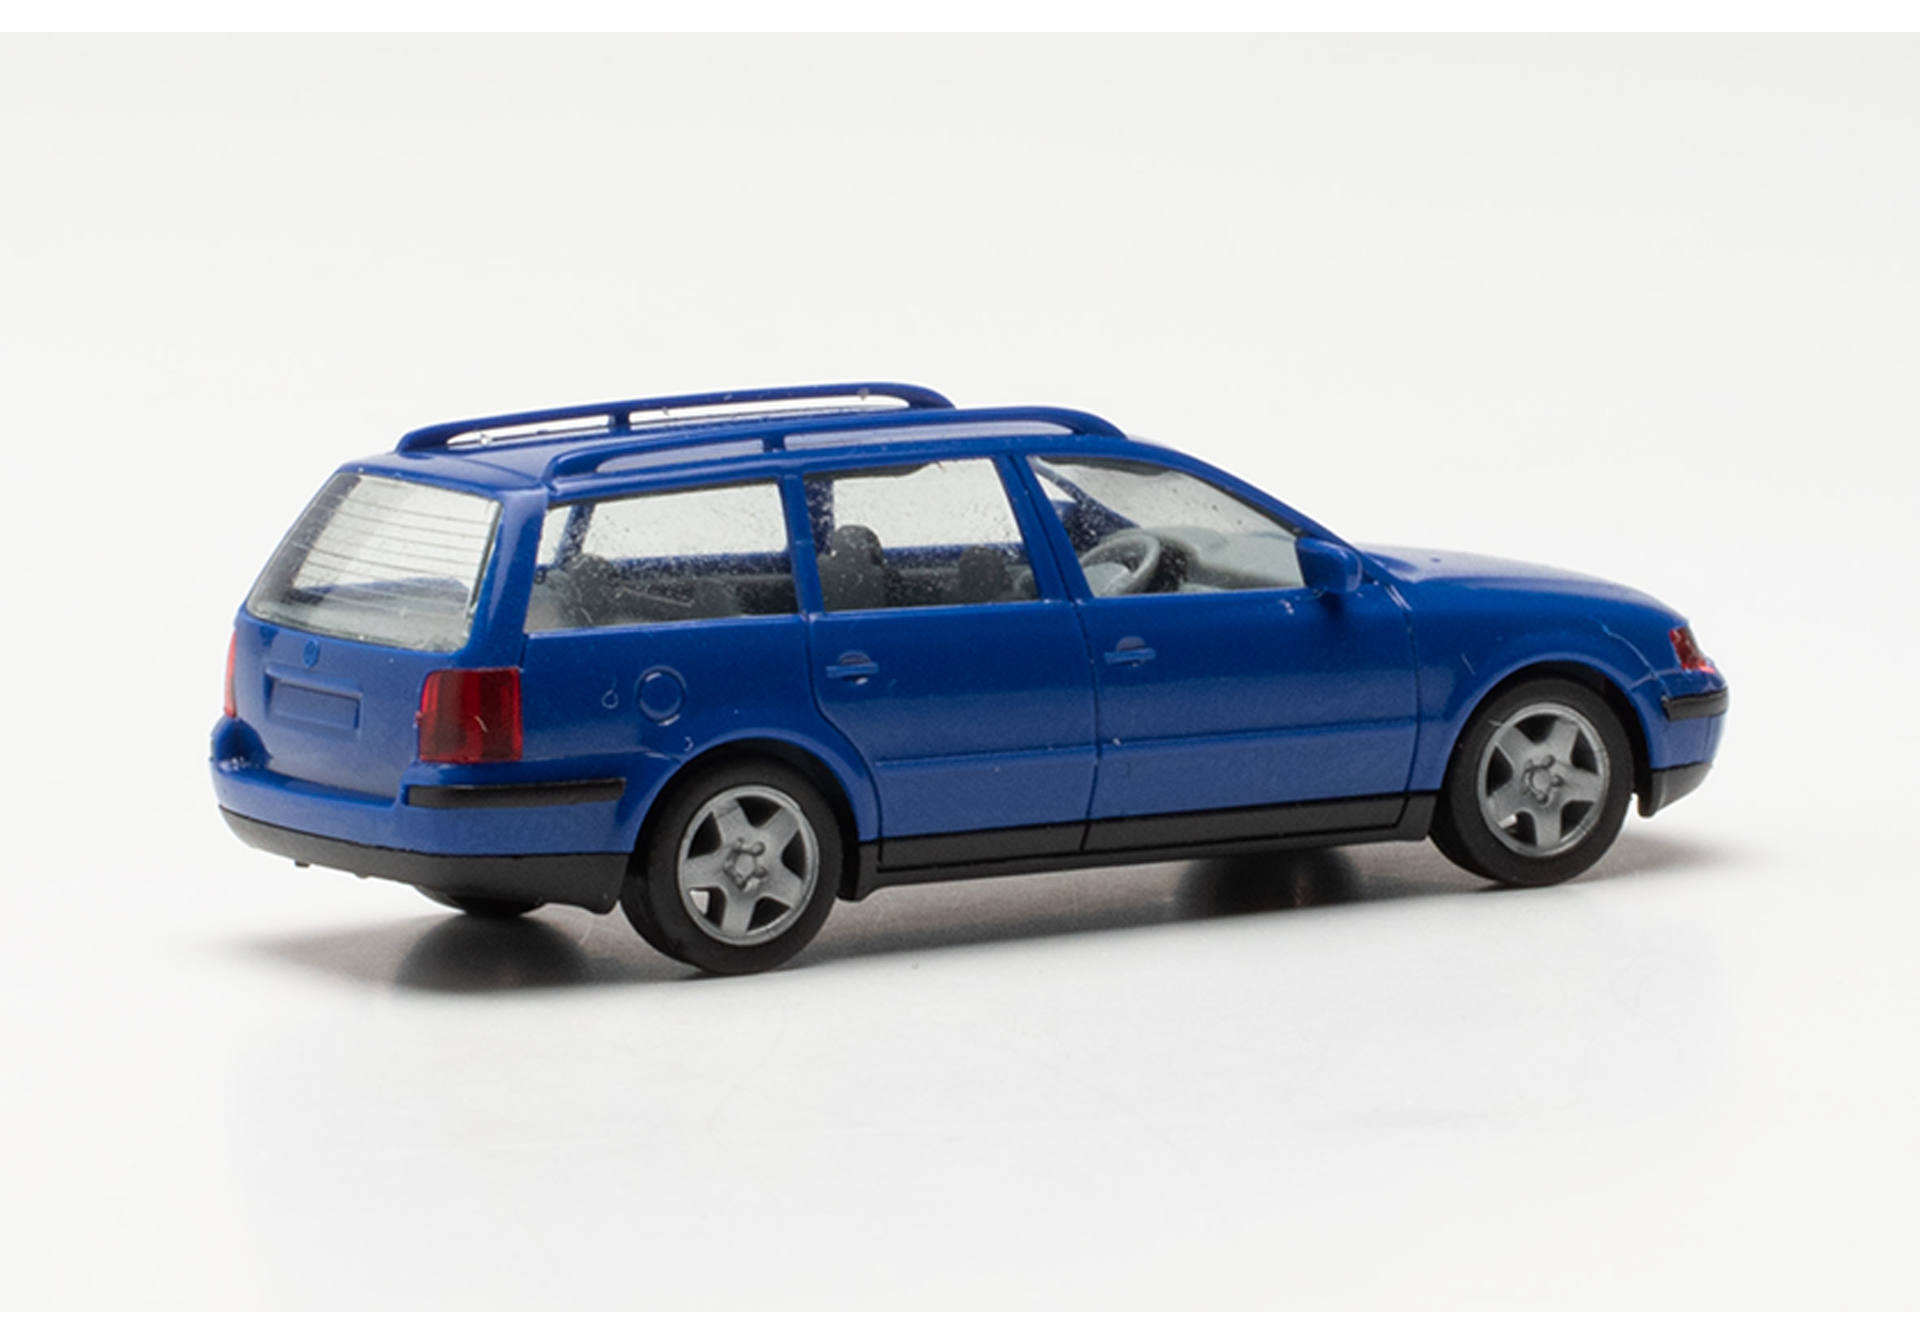 Herpa Minikit: Volkswagen (VW) Passat Variant, ultramarinblau